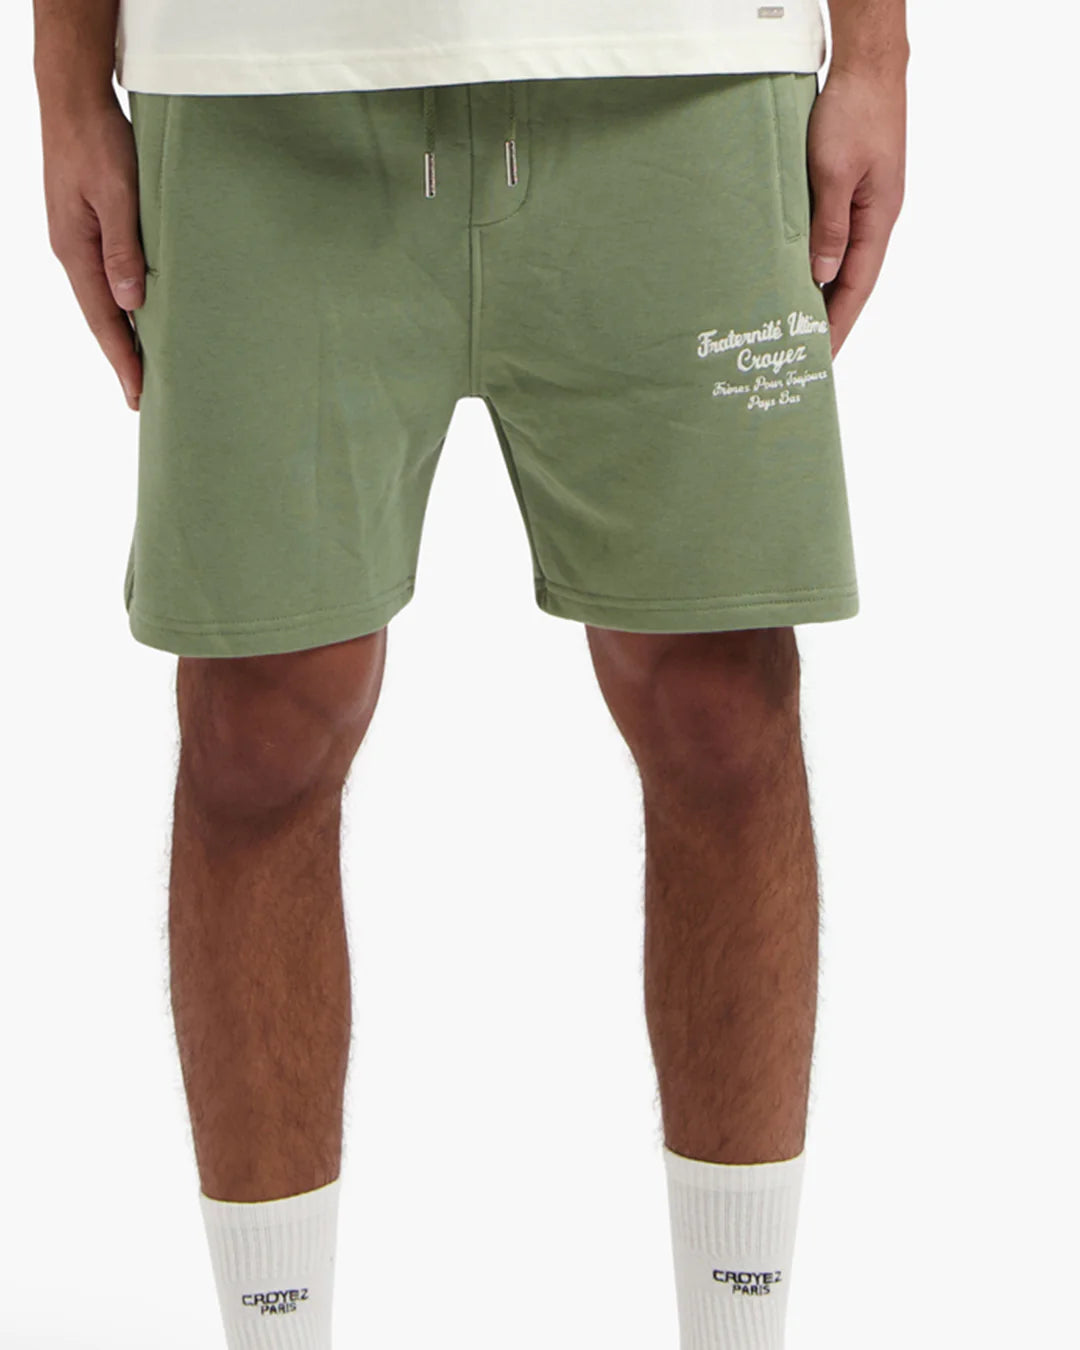 Croyez fraternité shorts - washed olive